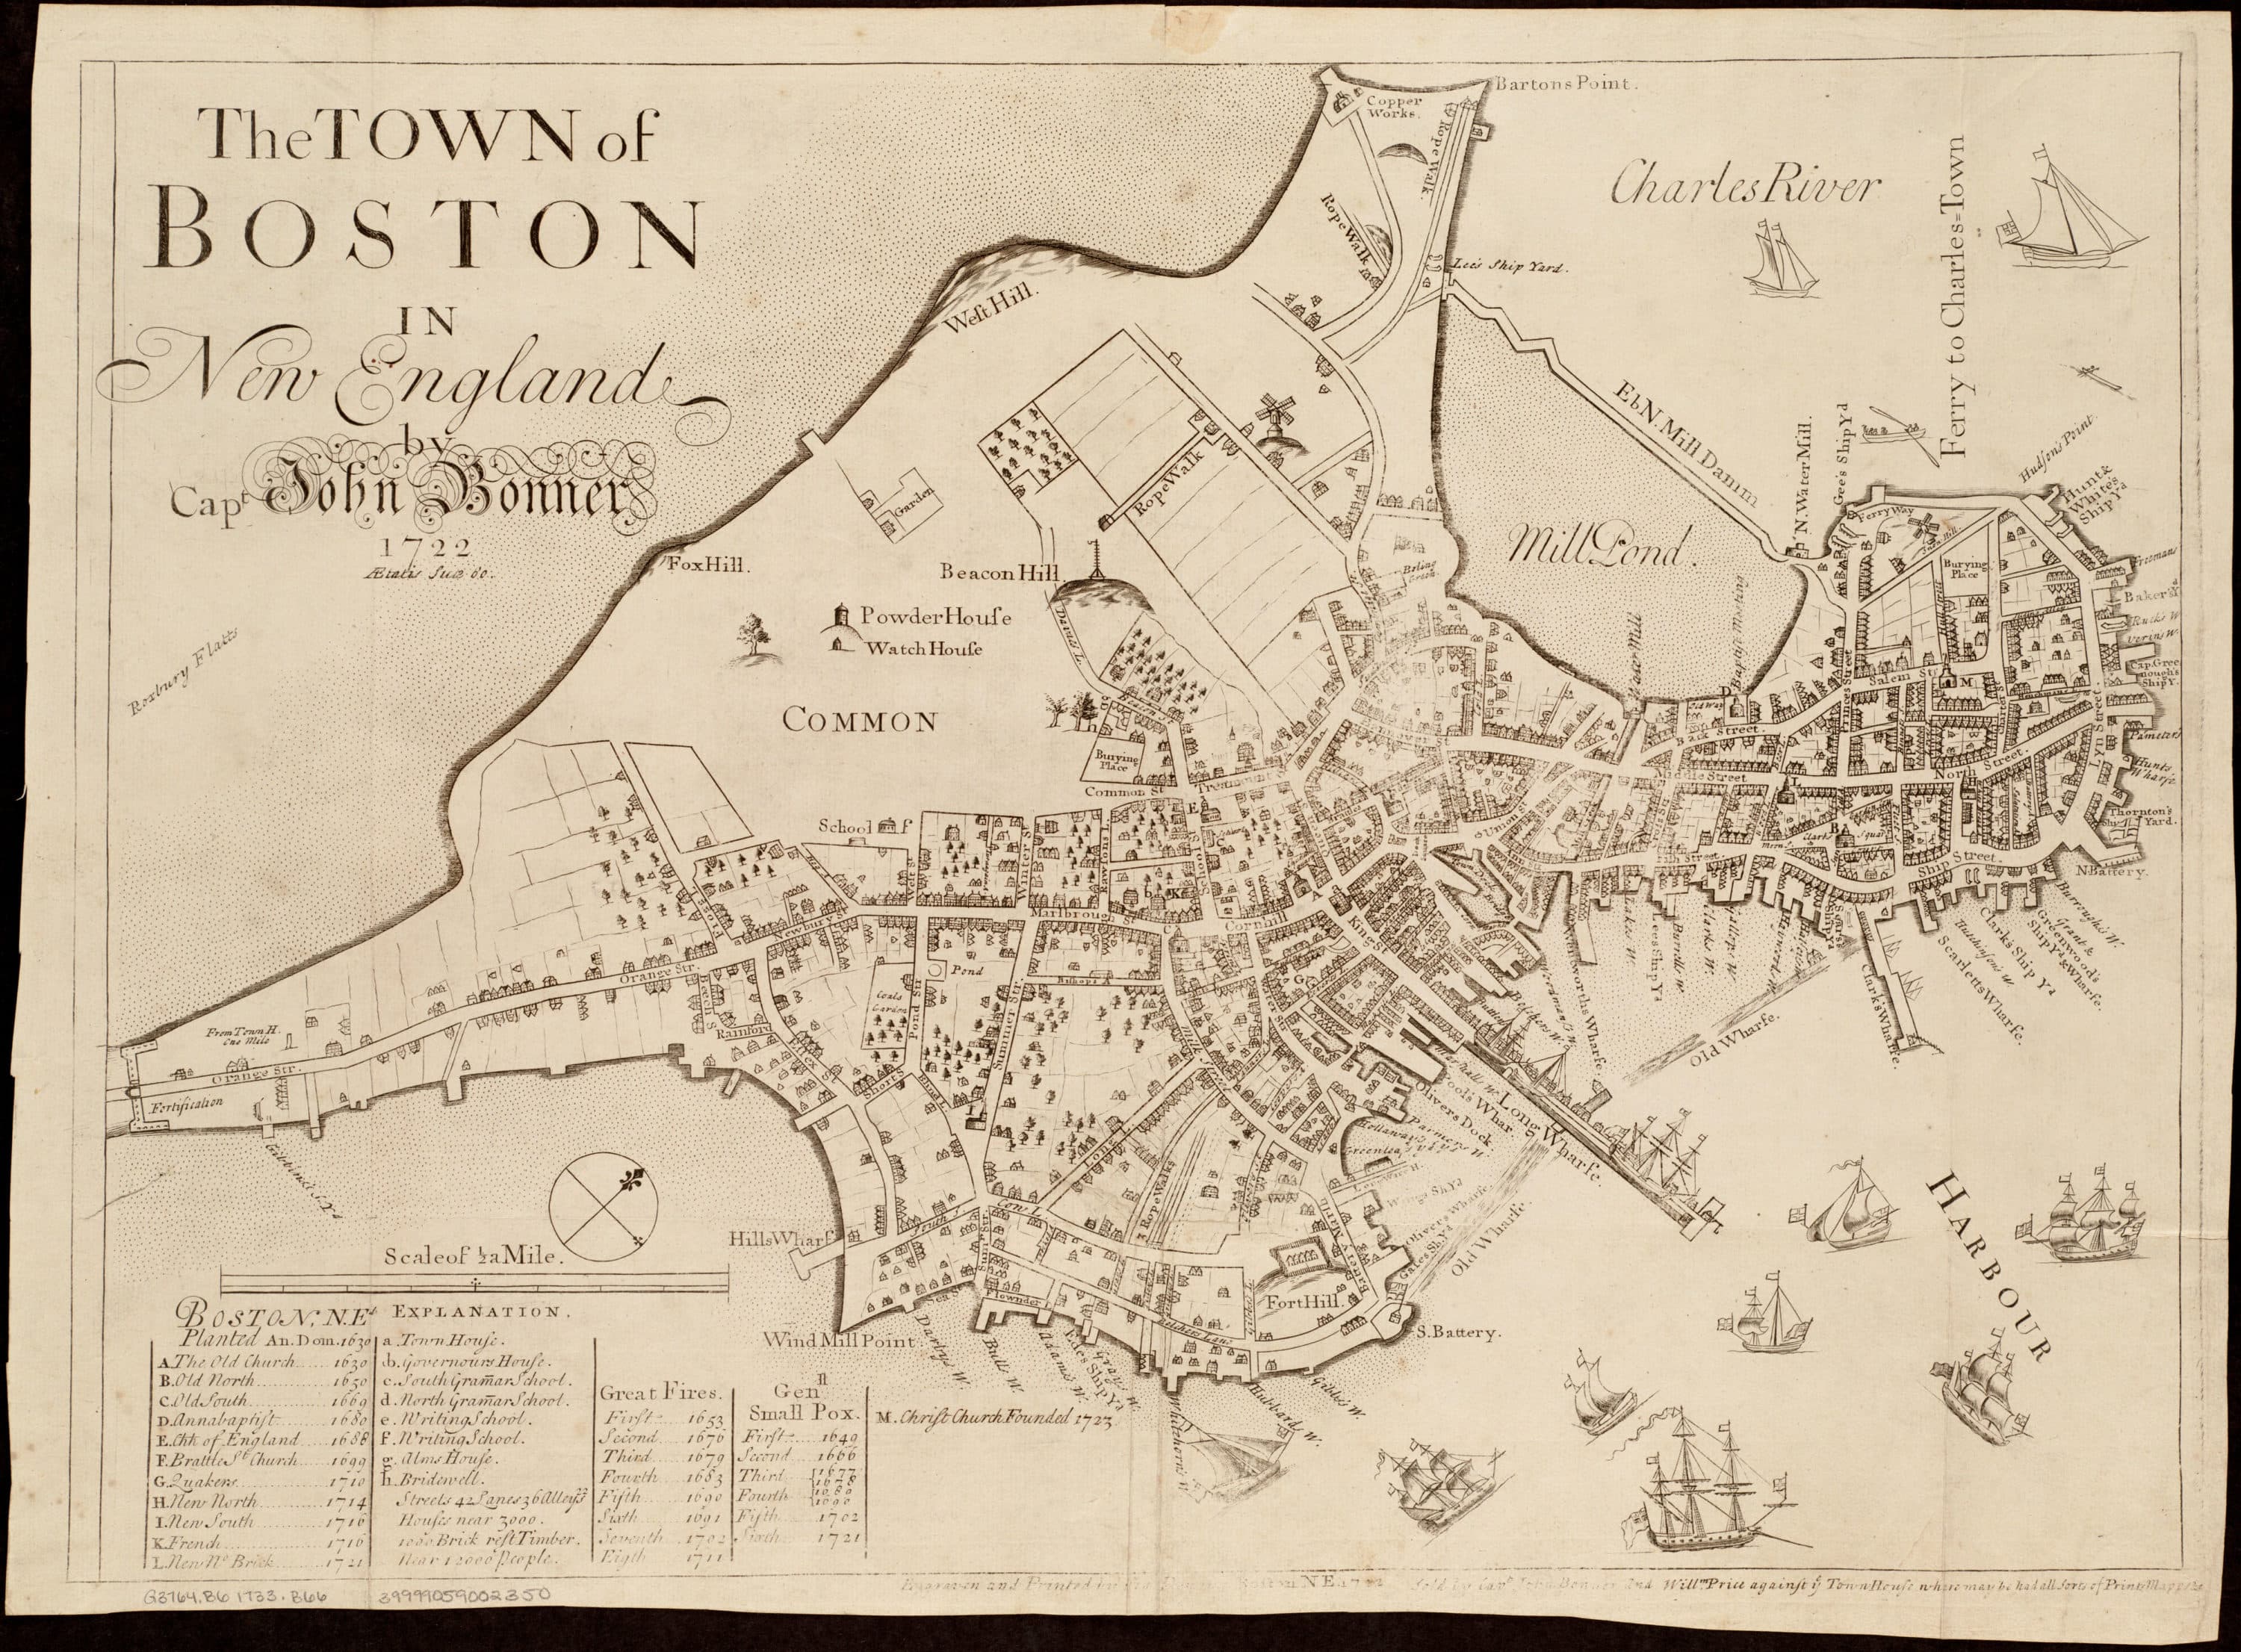 craft station Archives - Boston, Massachusetts